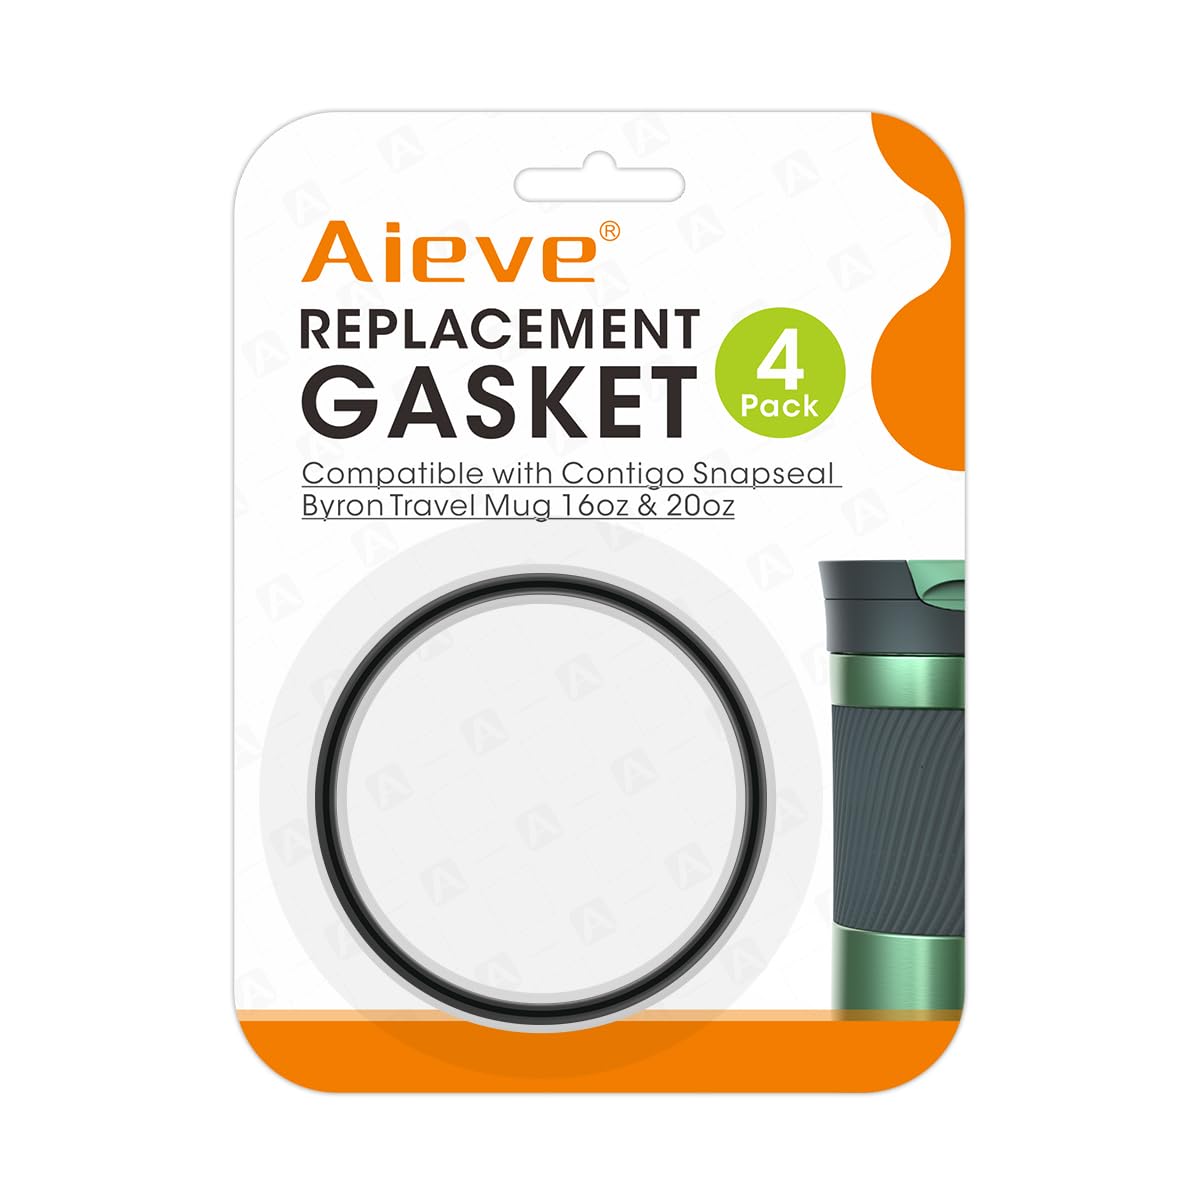 AIEVE Replacement Gasket Compatible with Contigo Snapseal Byron Travel Mug 16oz & 20oz, Silicone Lid Seal Replacement for Contigo Snapseal(4 Pack)